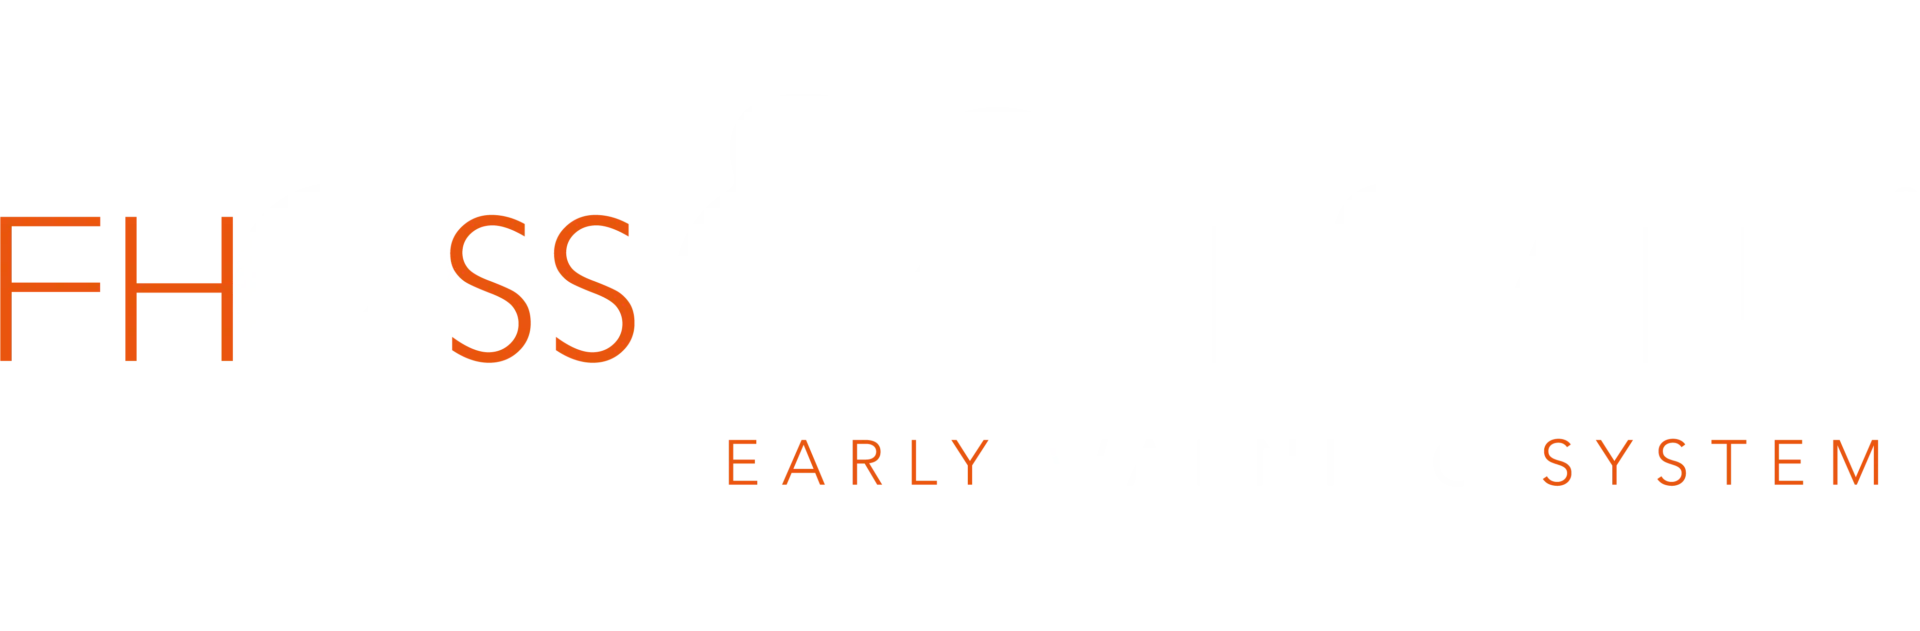 Cycle Lane Early Warning System logo